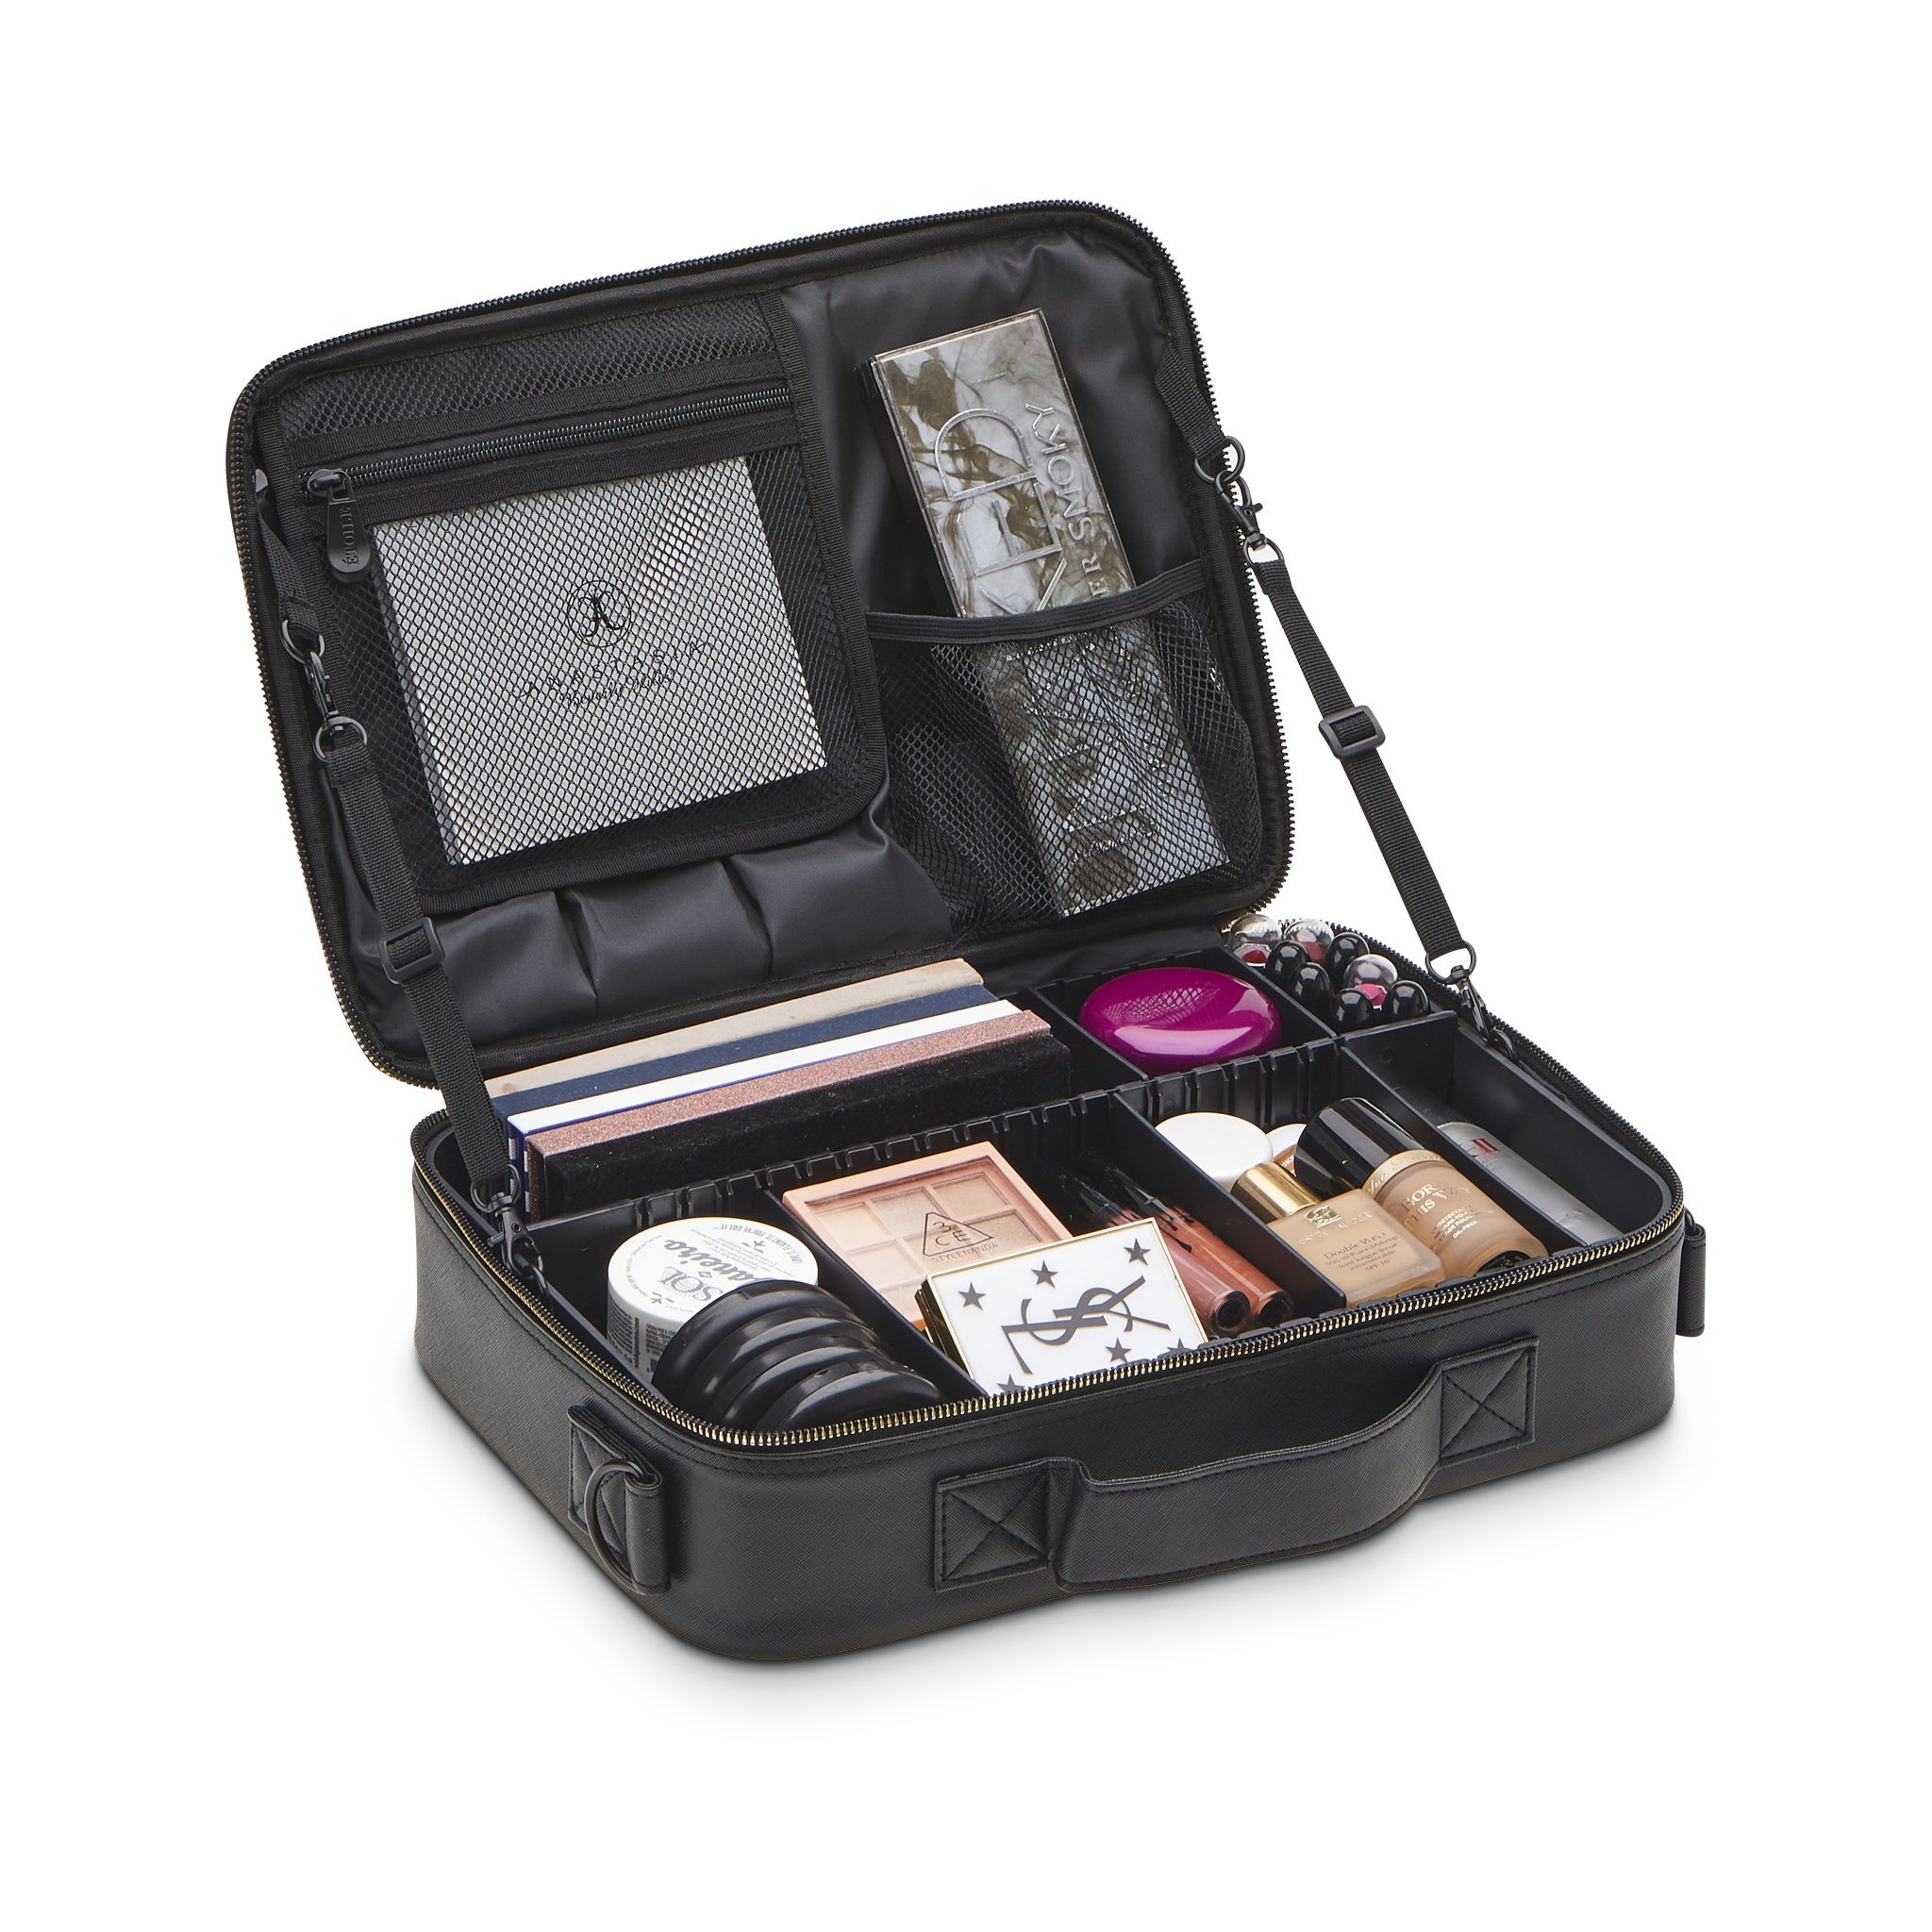  Estee Lauder Red Velveteen Makeup Cosmetics Train Case Travel  Storage Bag : Beauty & Personal Care